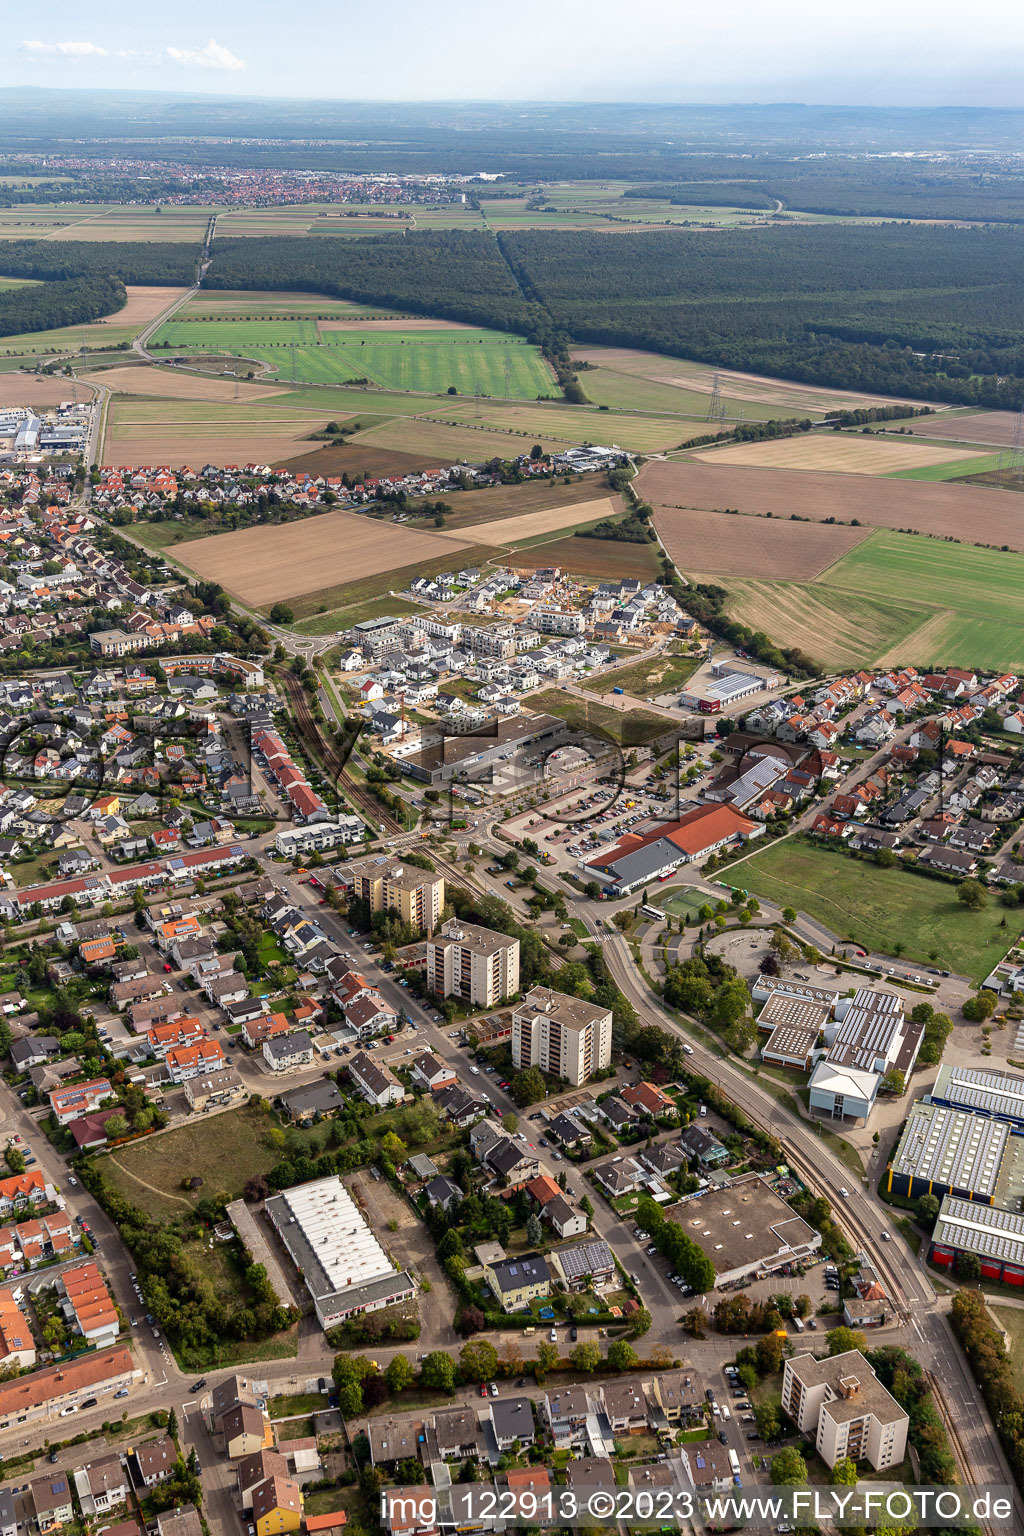 District Linkenheim in Linkenheim-Hochstetten in the state Baden-Wuerttemberg, Germany viewn from the air